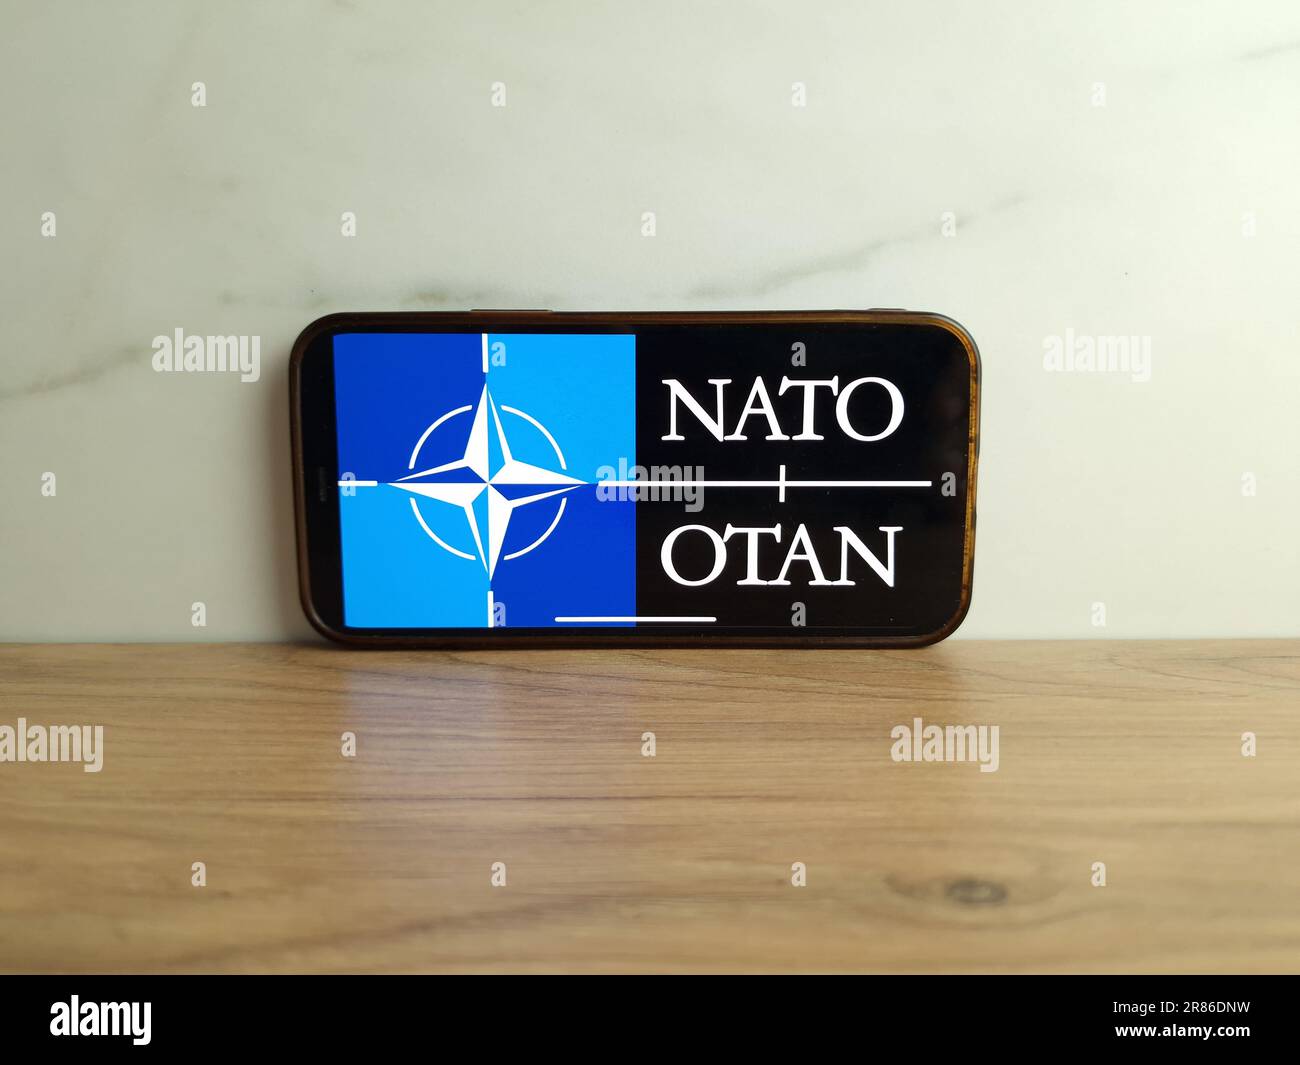 Konskie, Poland - June 17, 2023: NATO North Atlantic Treaty Organization logo displayed on mobile phone screen Stock Photo